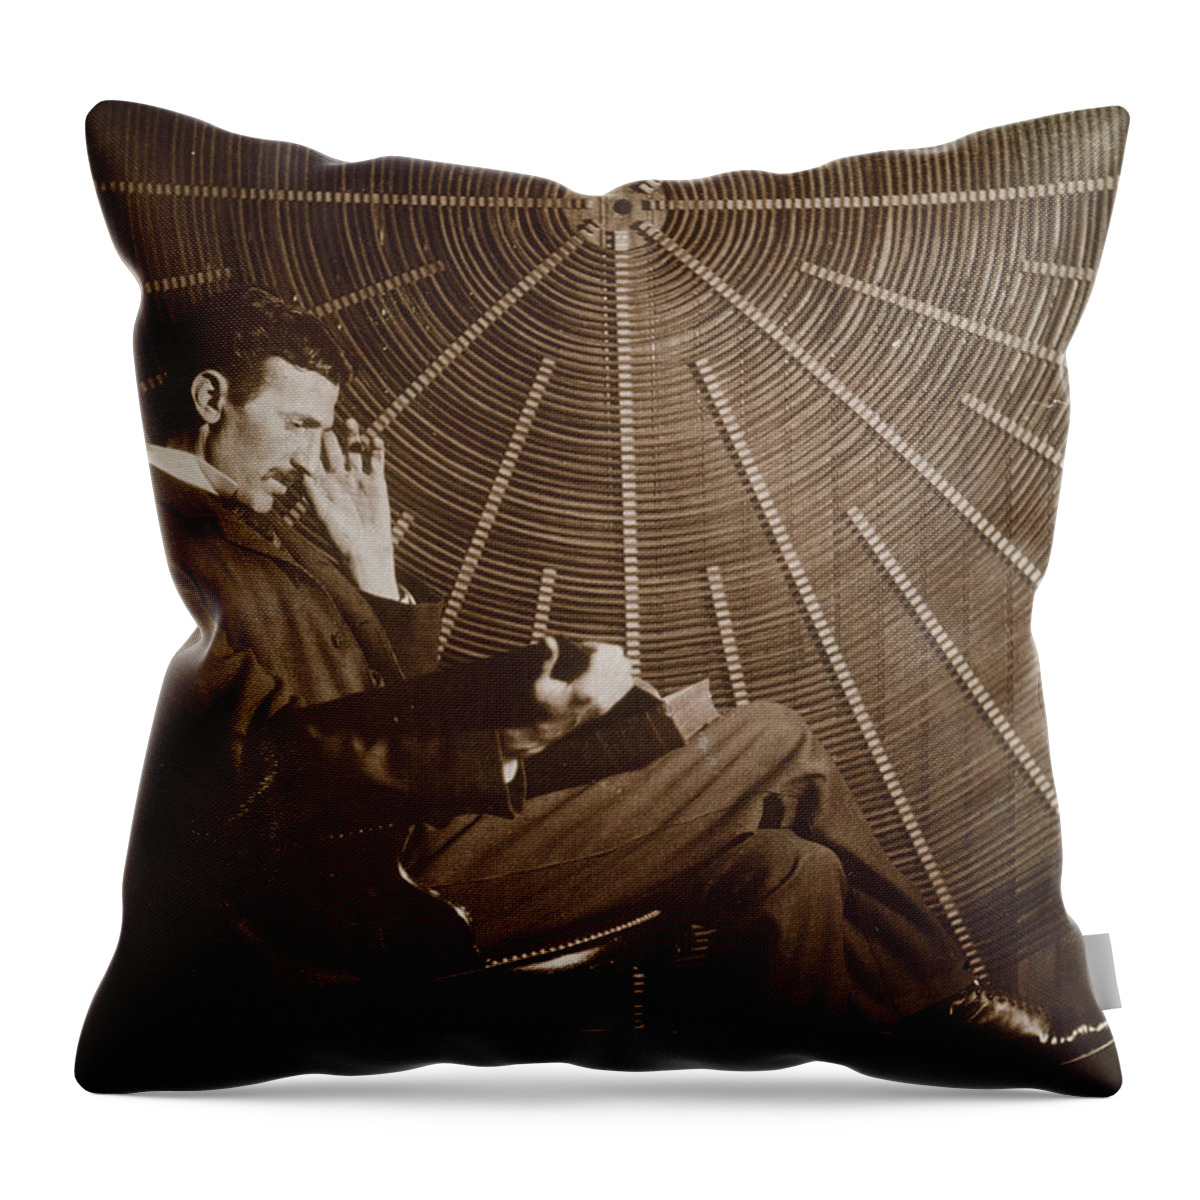 1895 Throw Pillow featuring the photograph Nikola Tesla by Granger